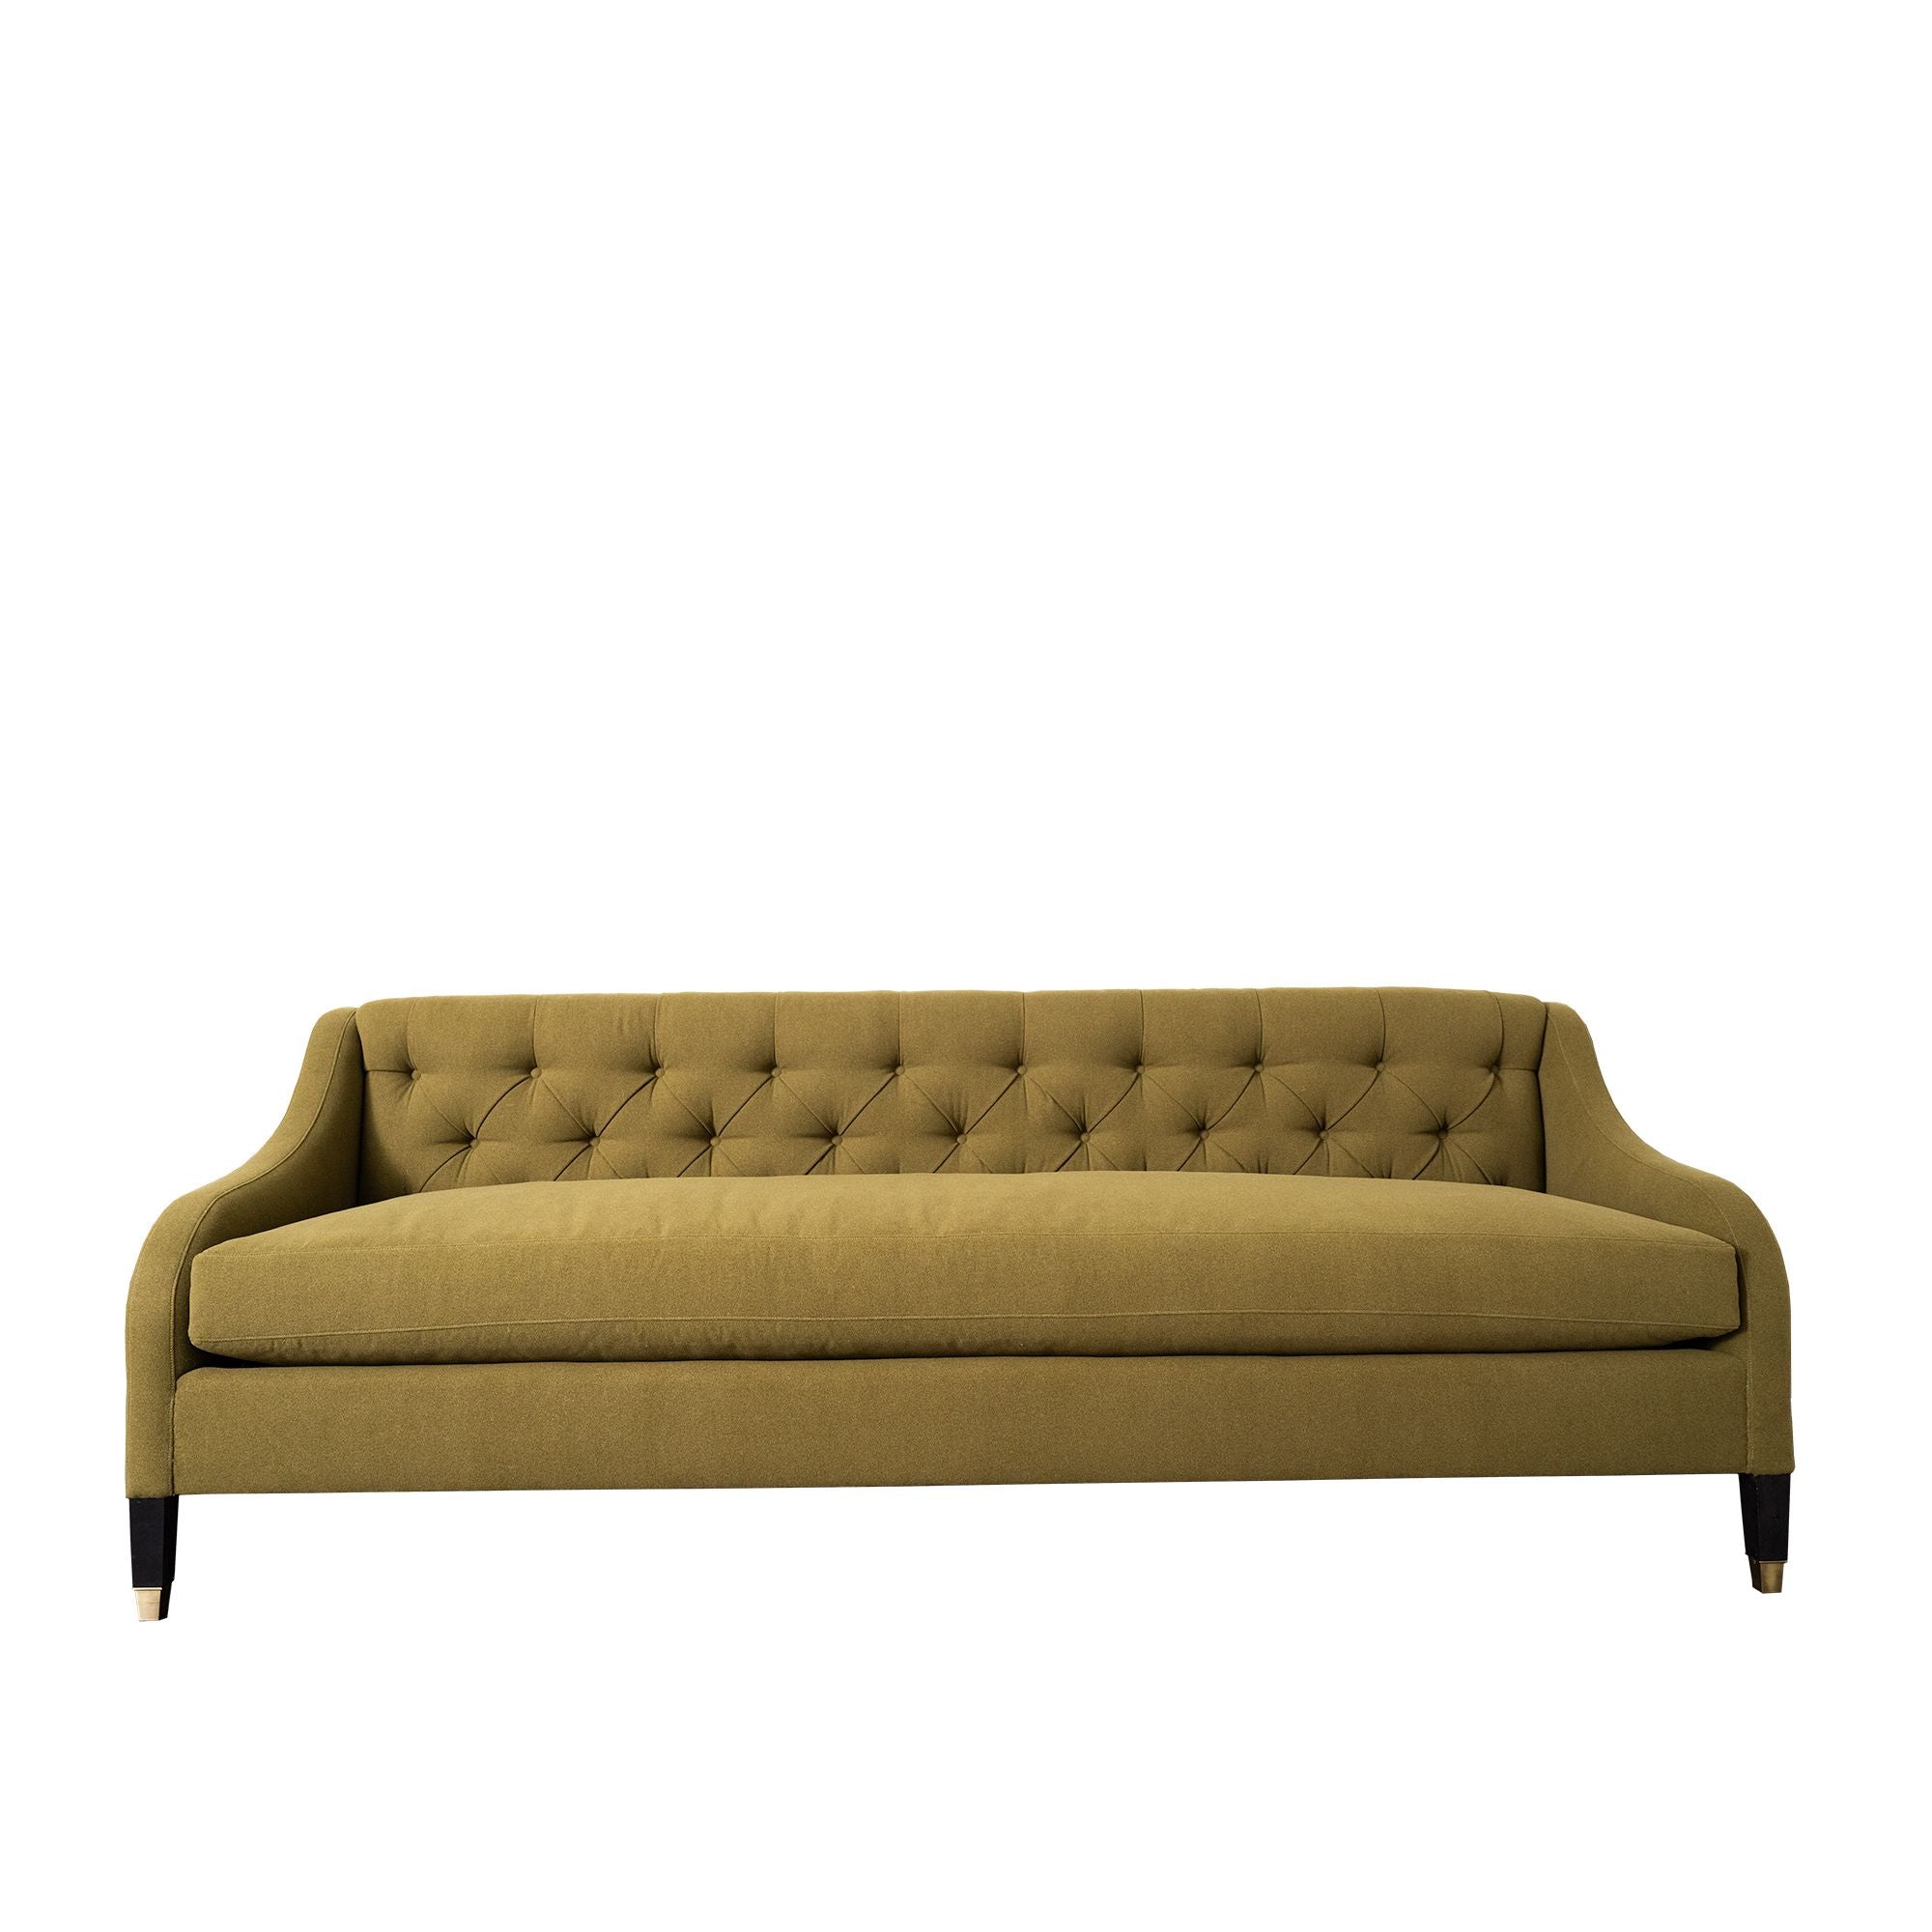 Olive Green Tufted Sofa